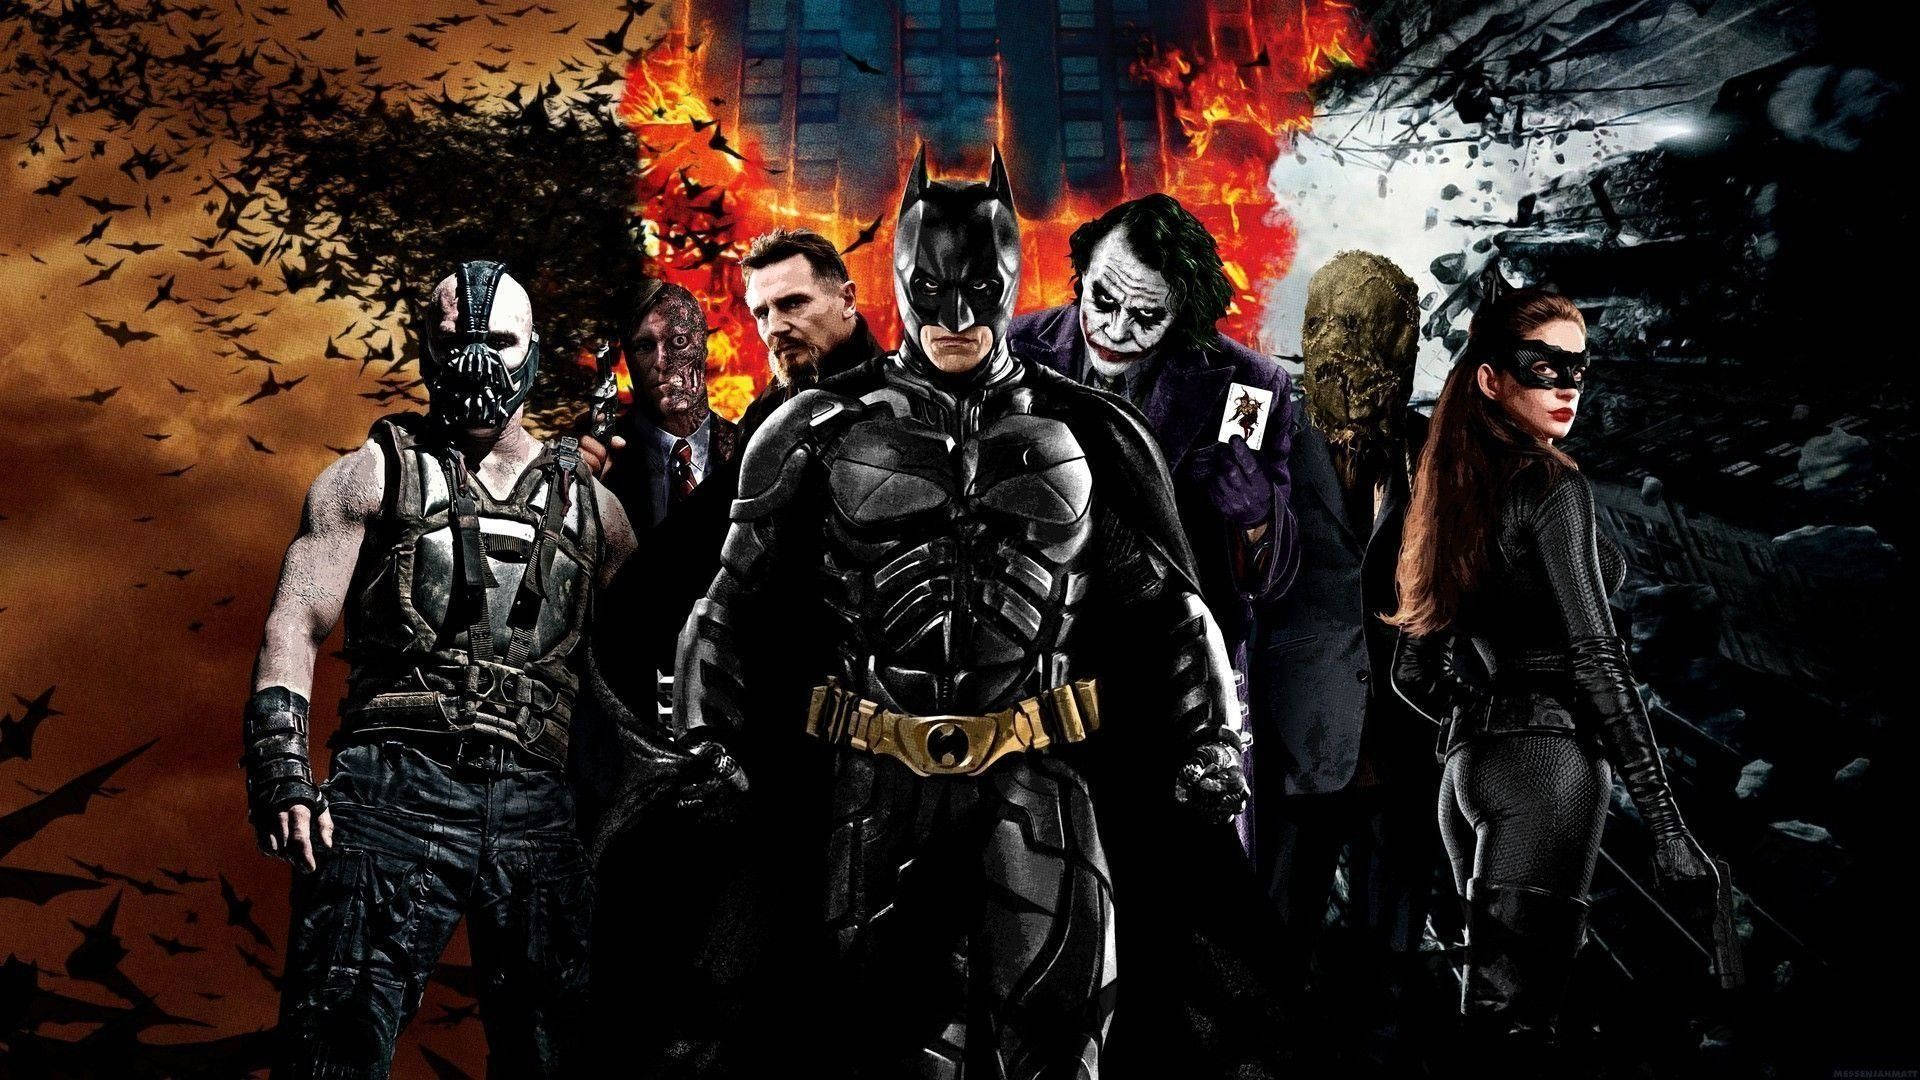 Dark Knight Batman And Villains Film Wallpaper